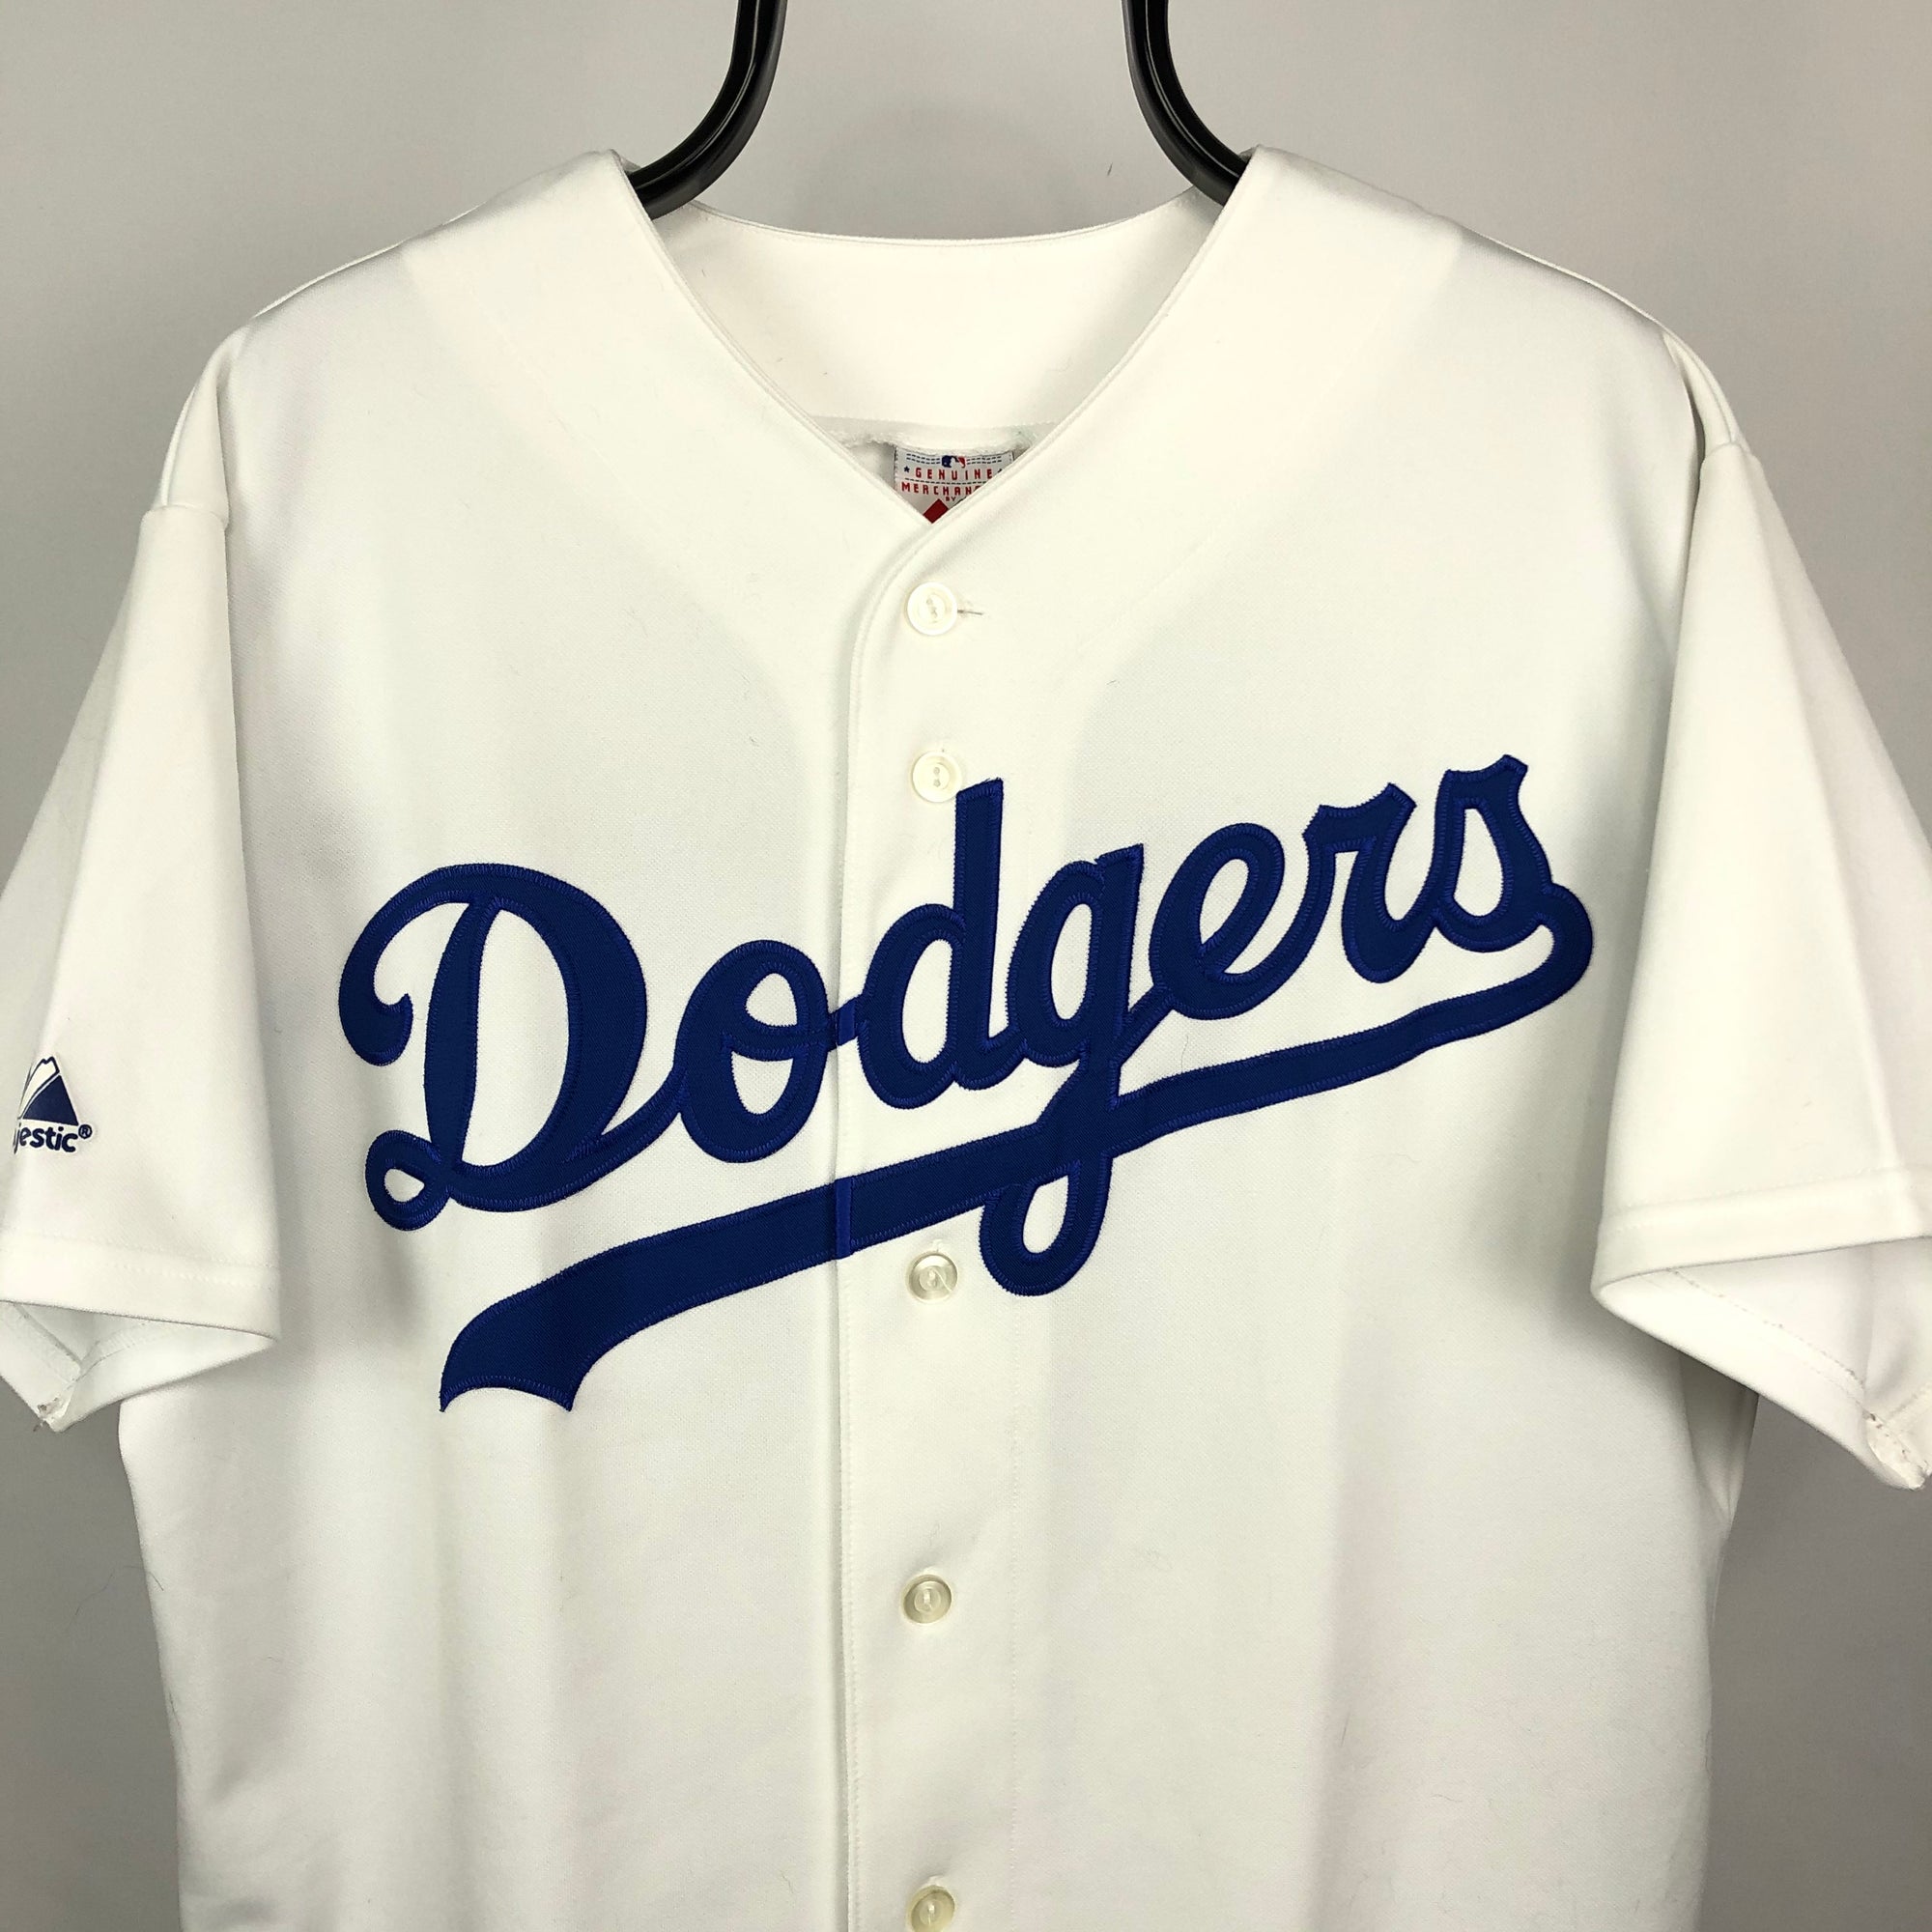 Vintage La Dodgers Baseball Shirt - Men's Large/Women's XL